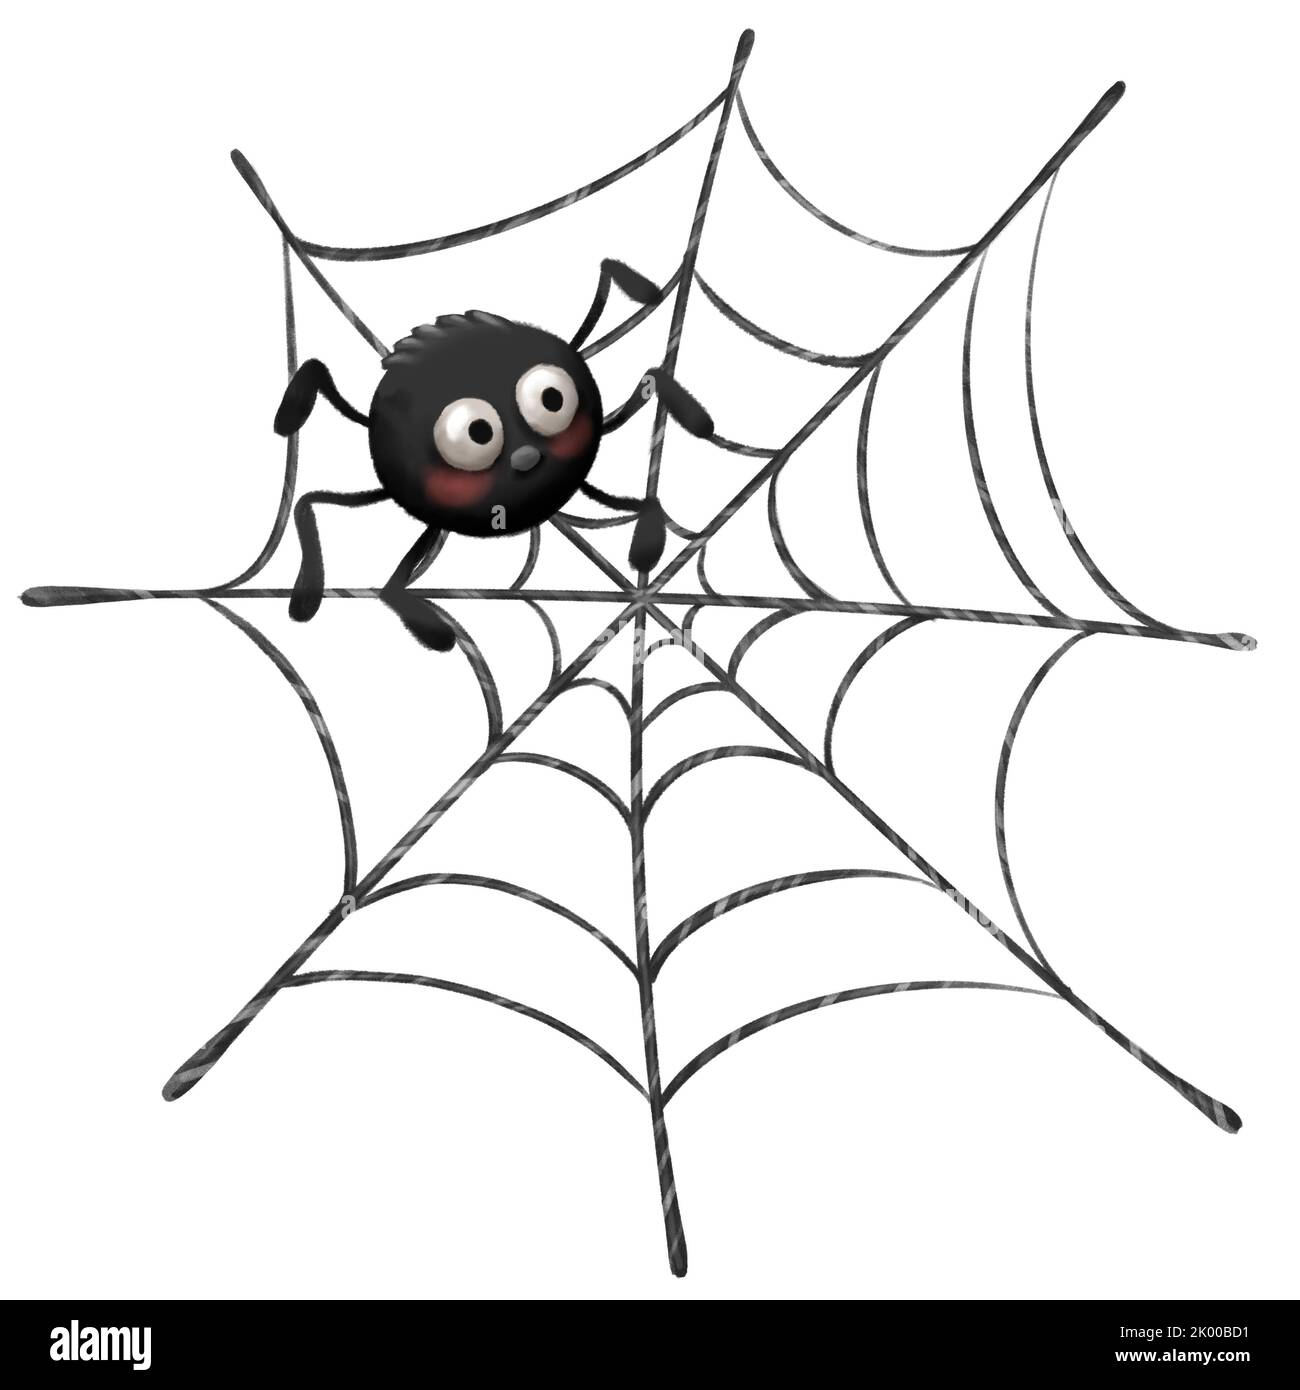 Spider and web. Cartoon illustration. Isolated on white. Stock Photo